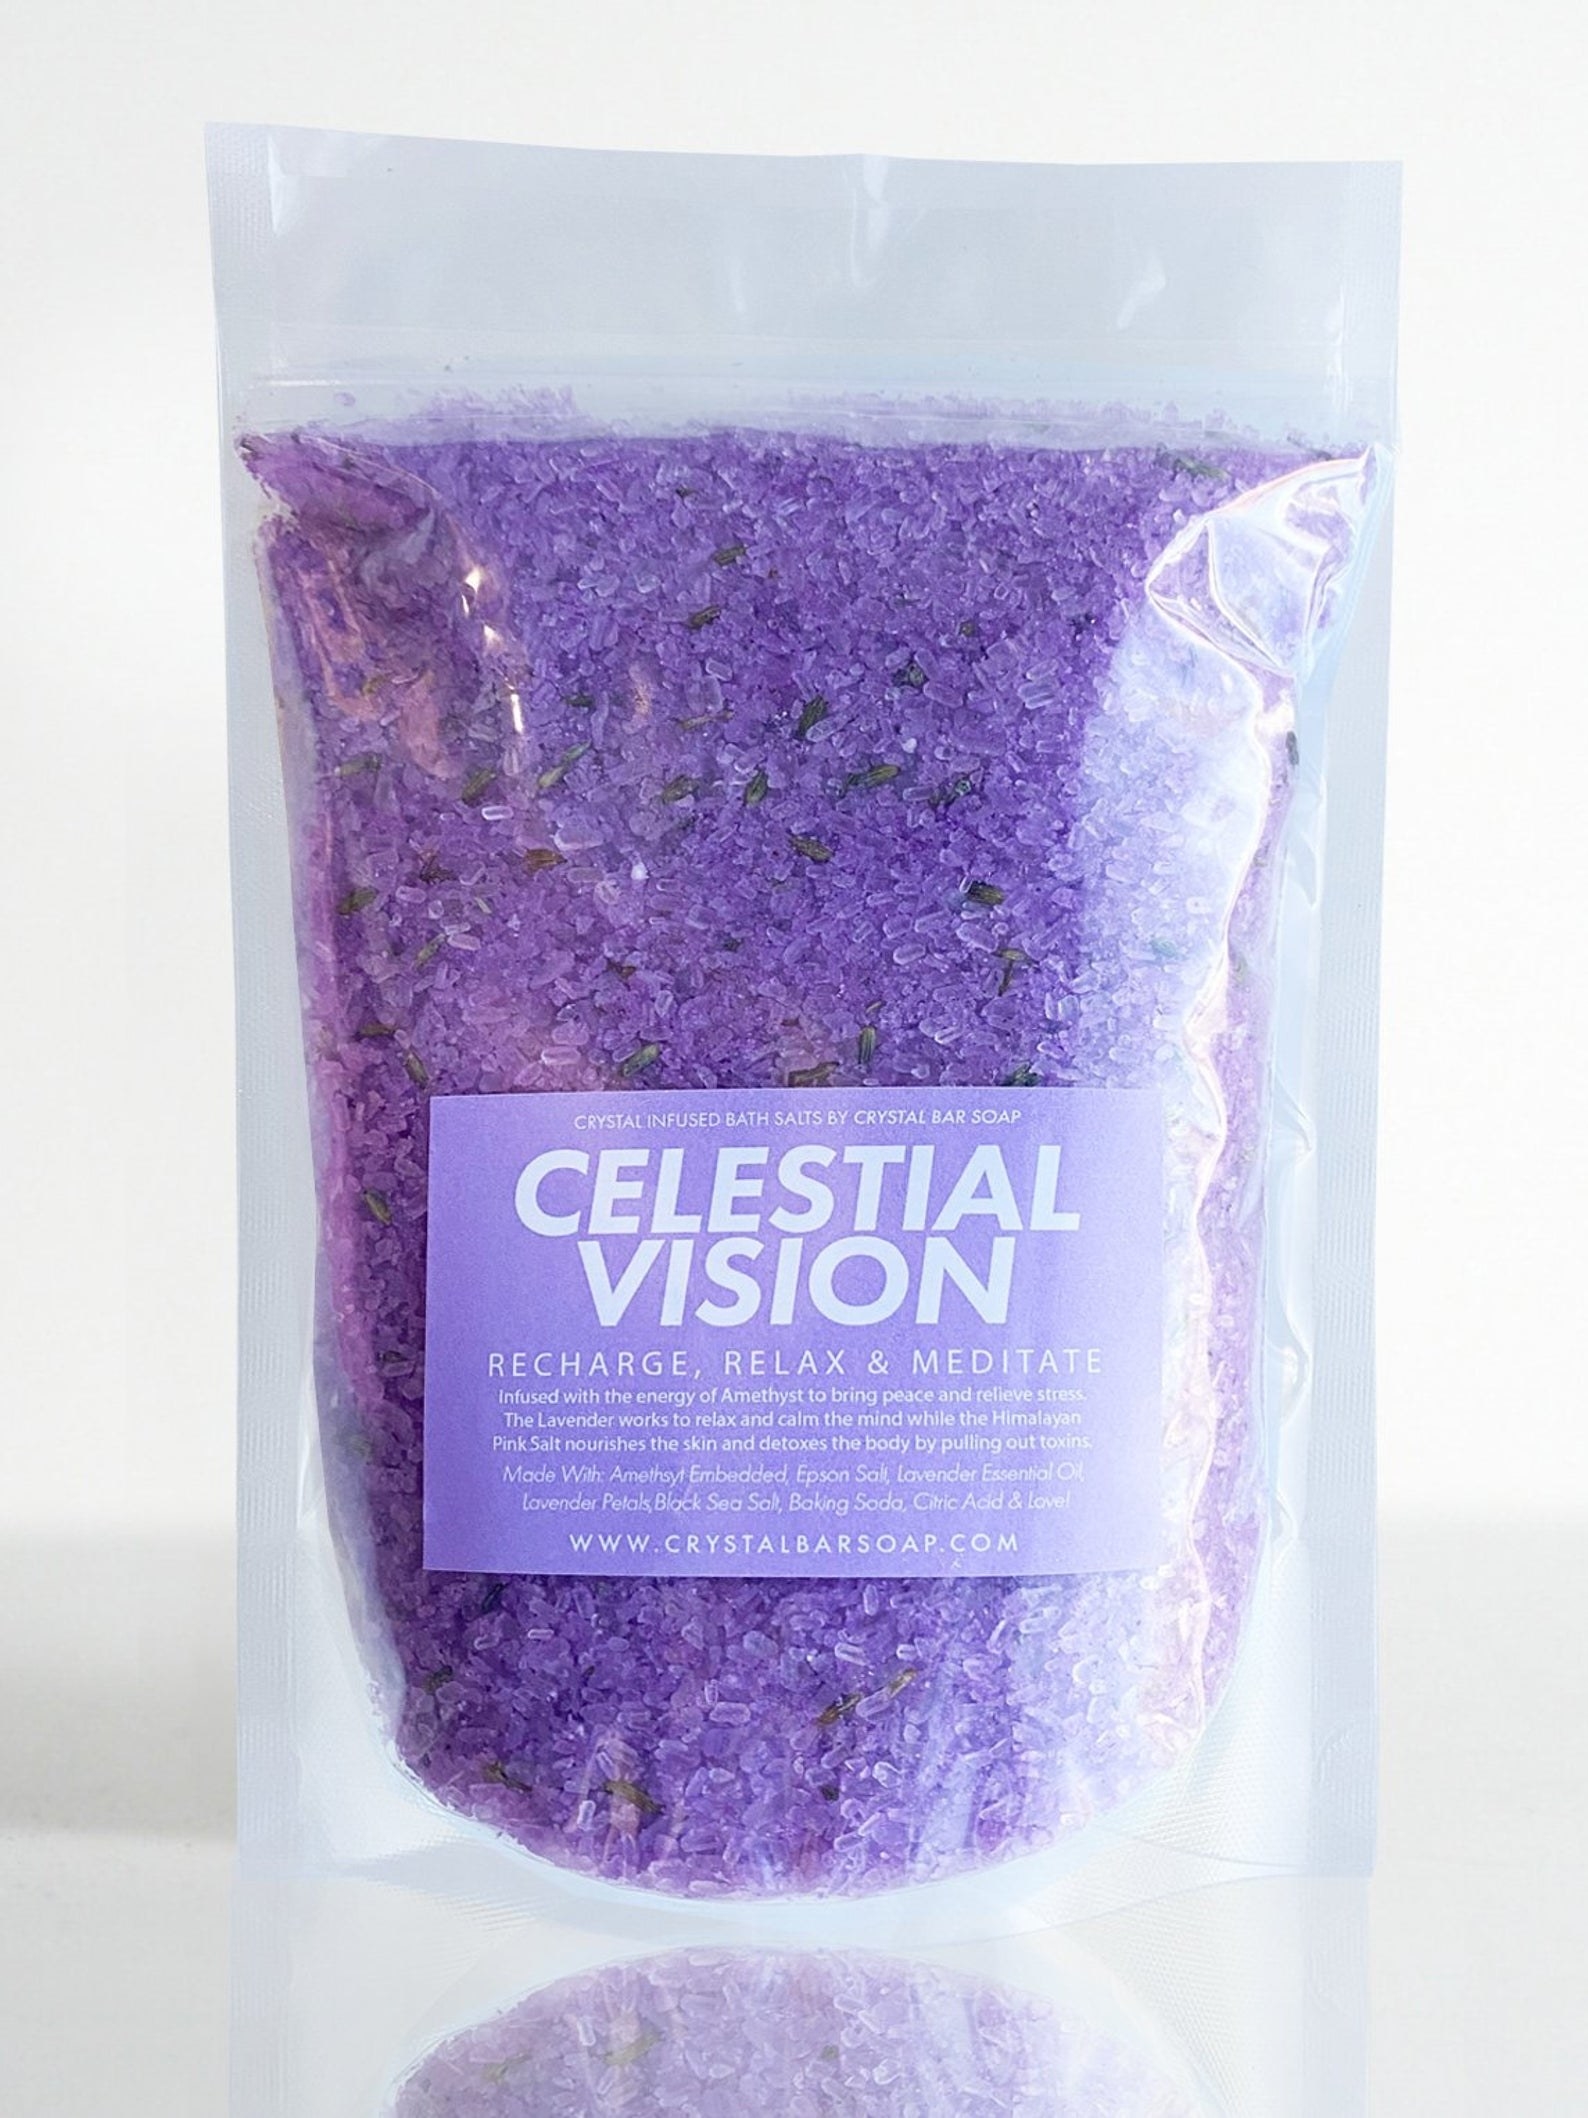 the bag of purple bath salt